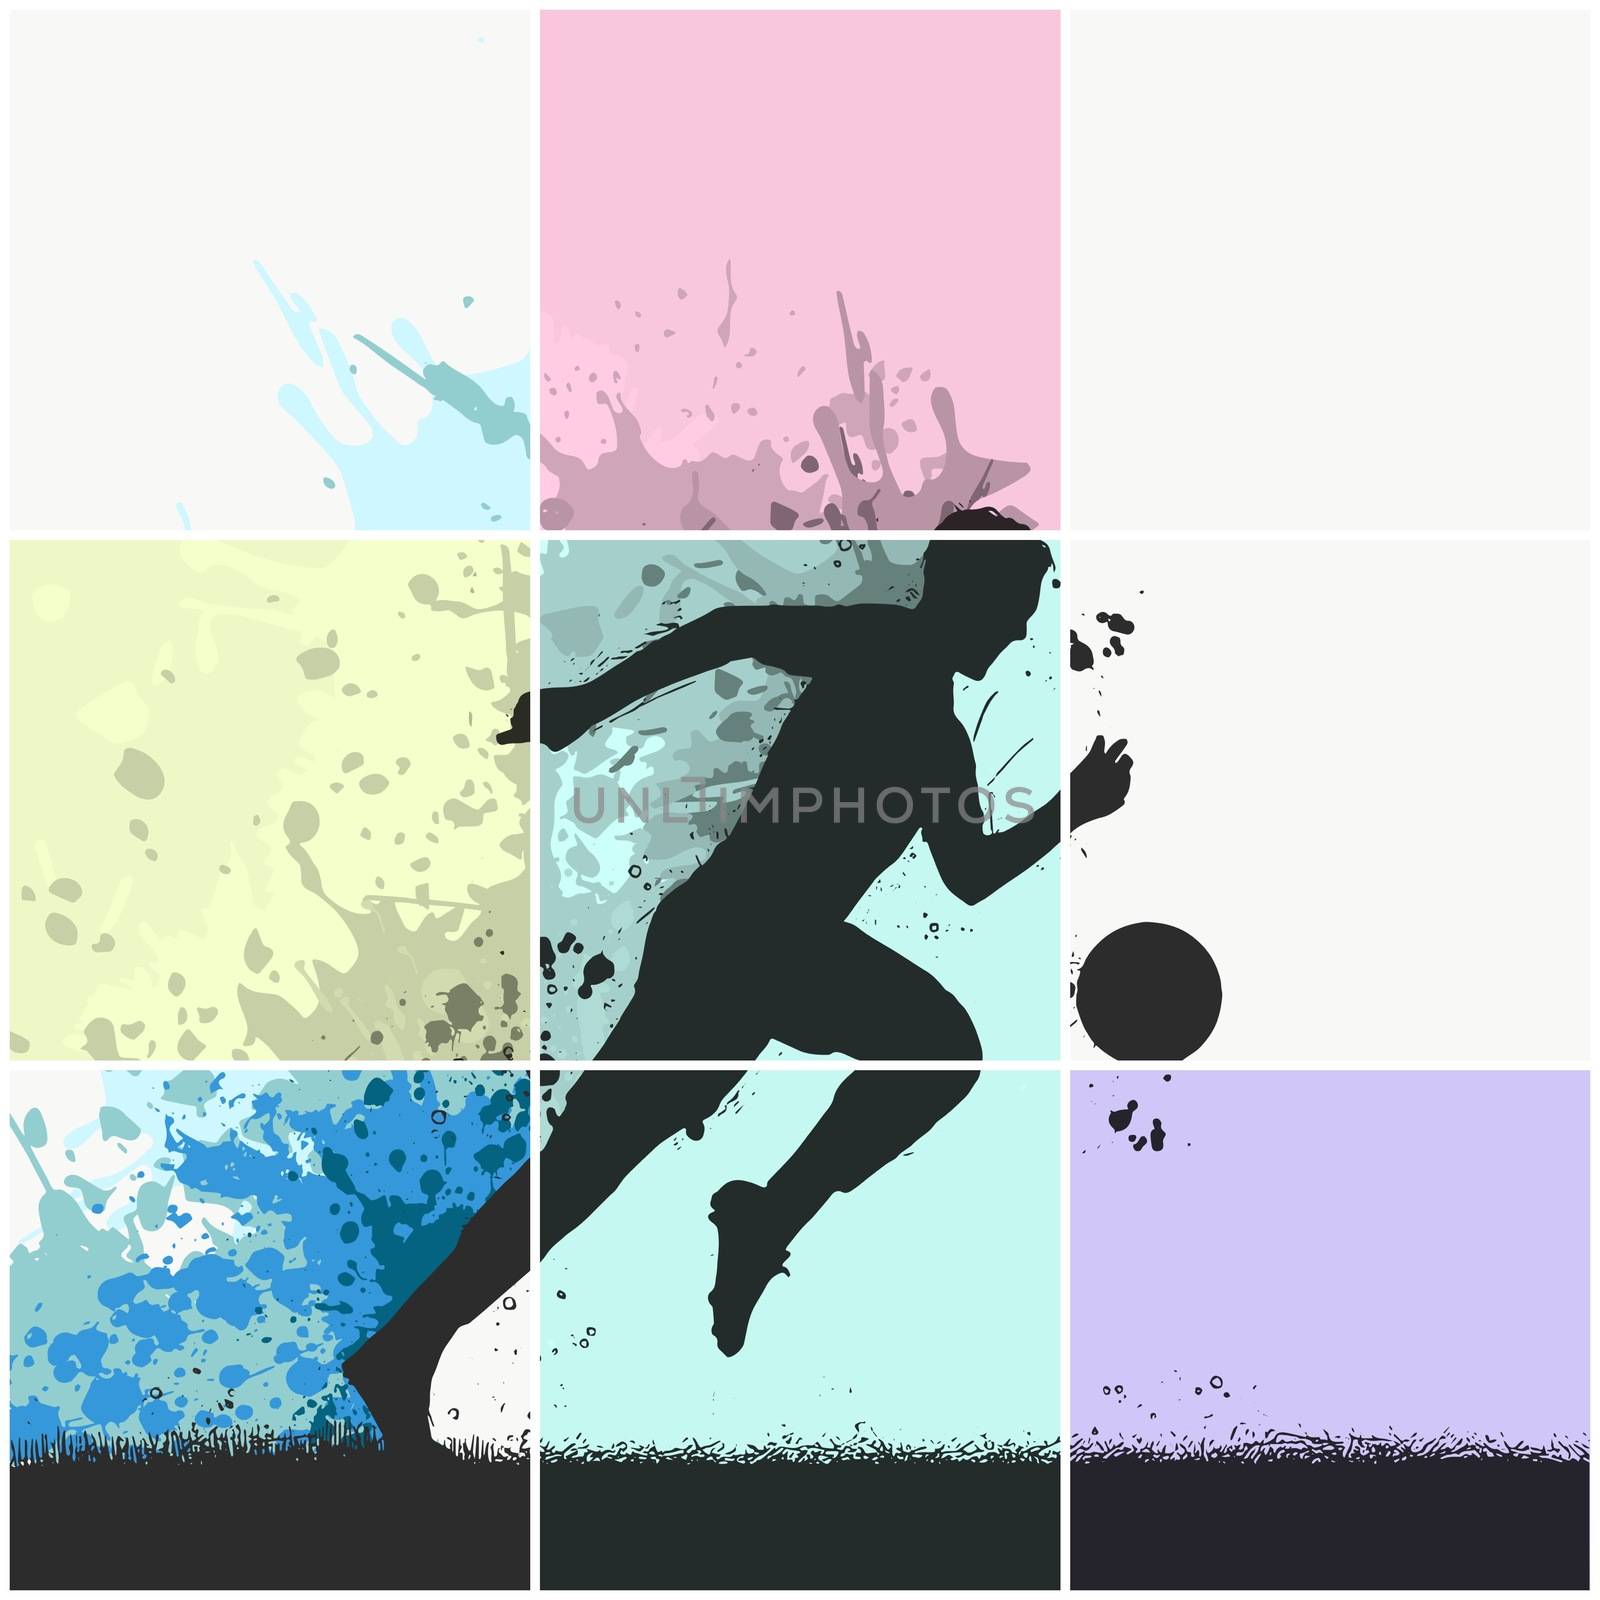 Soccer player kicking ball. illustration